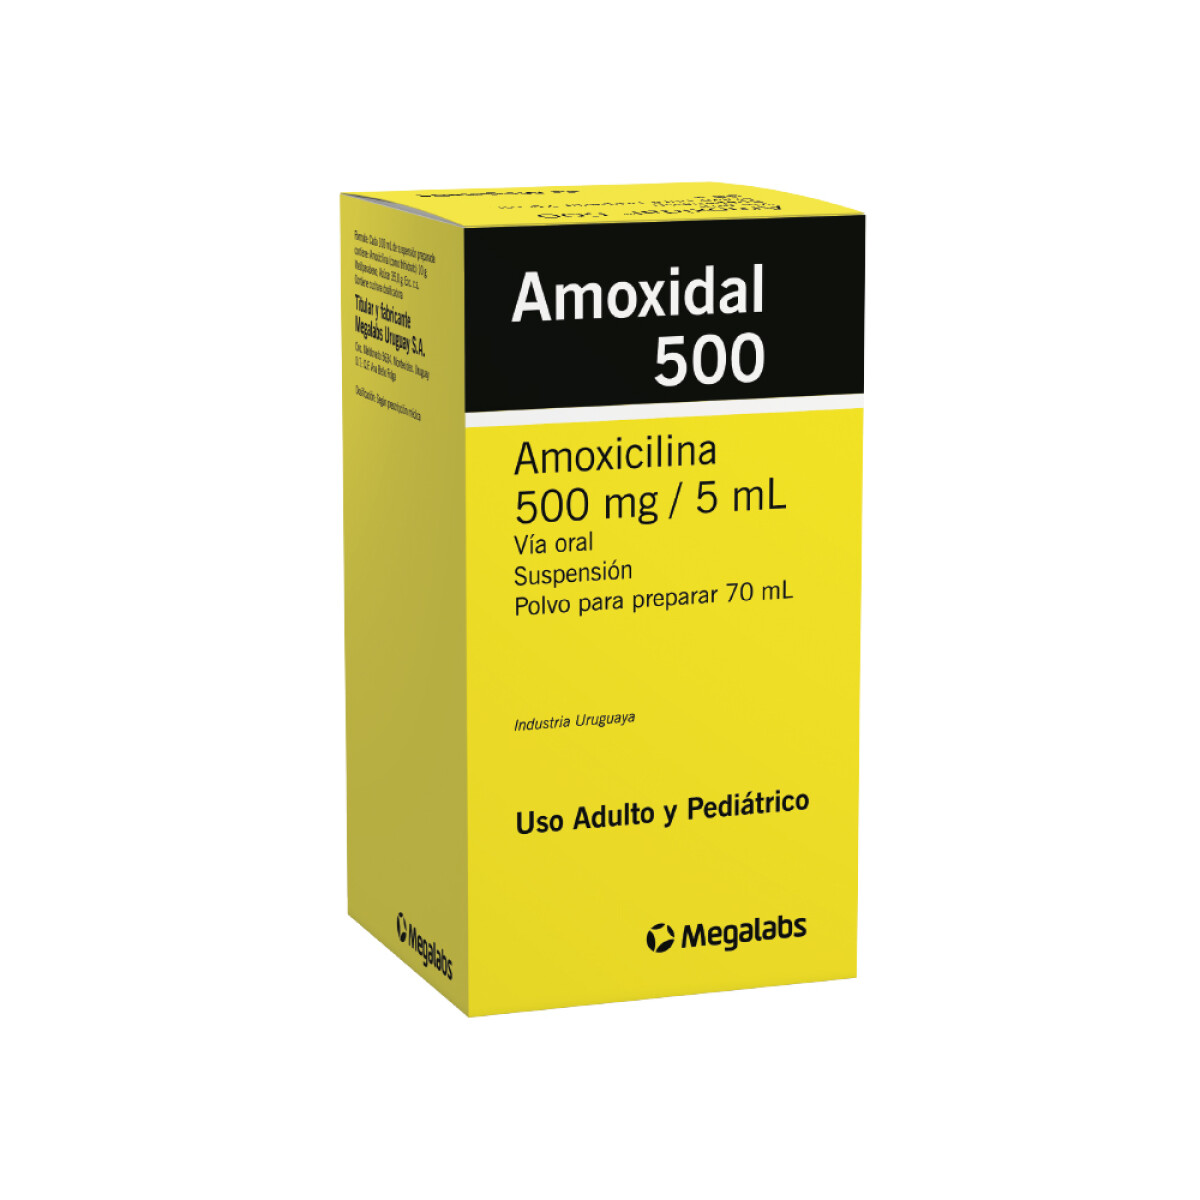 Amoxidal Suspensión 500 Mg. 70 Ml. 